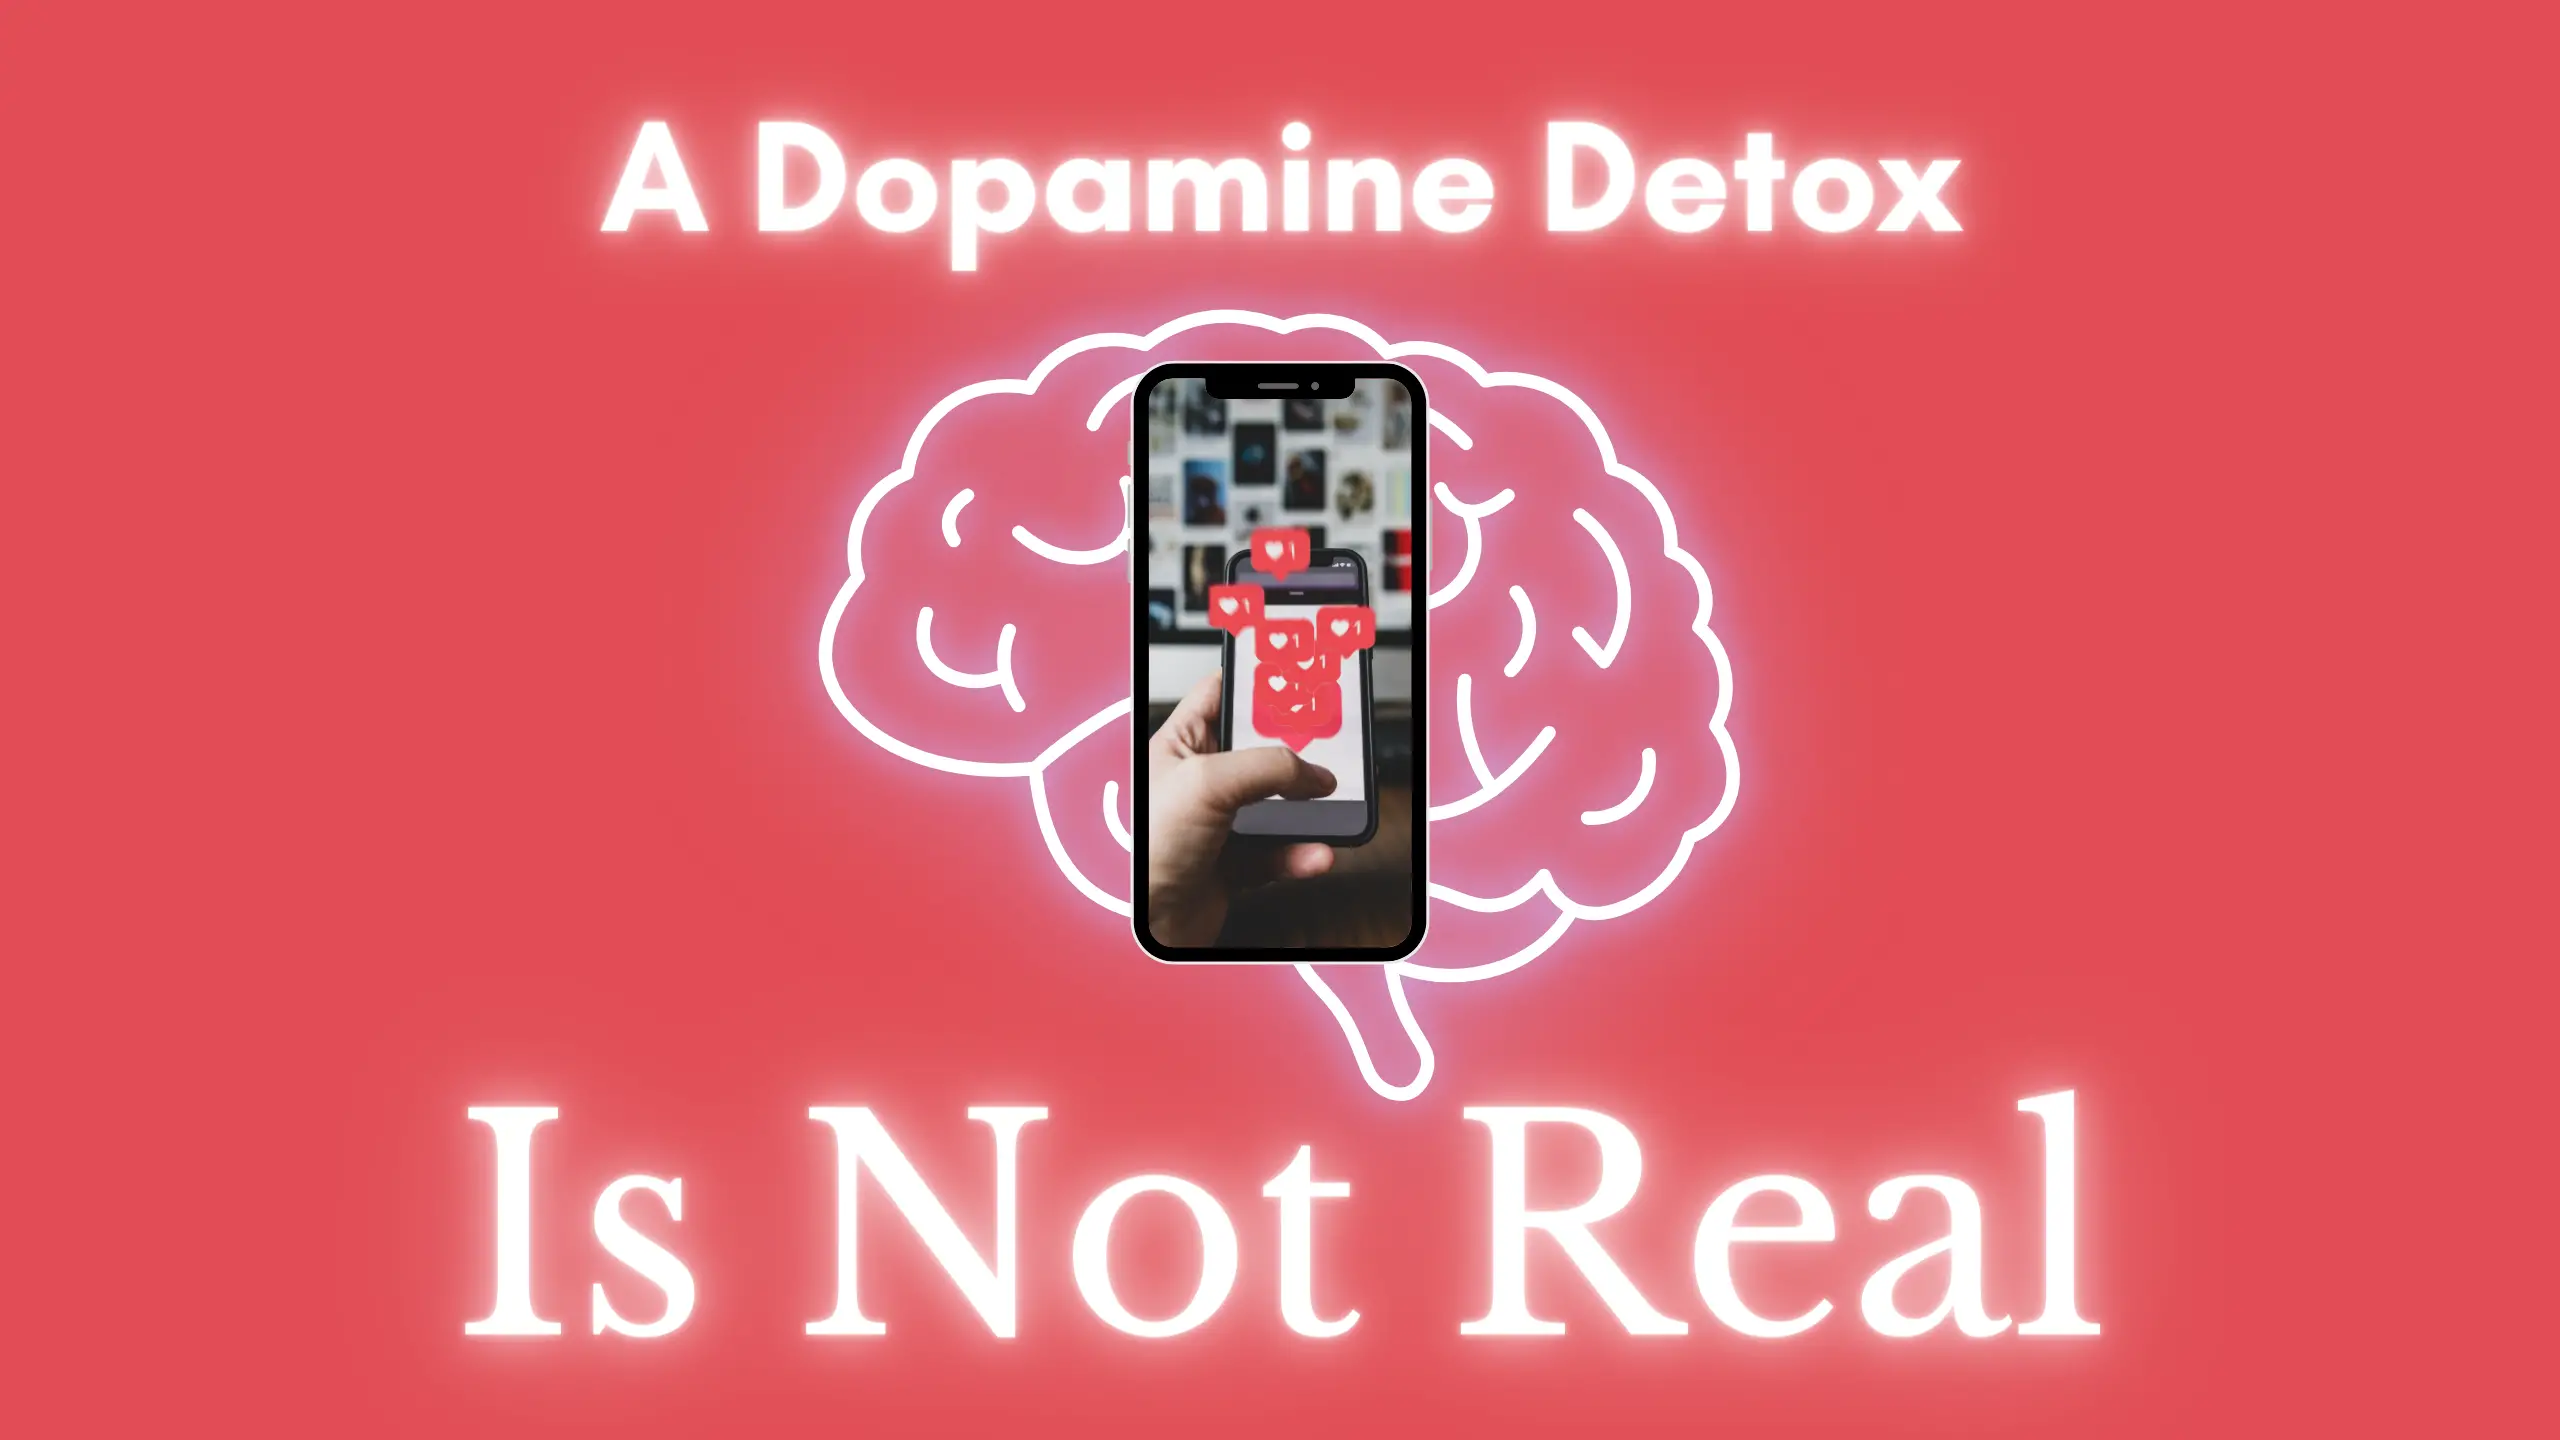 Can a Dopamine Detox Help You Set Goals?